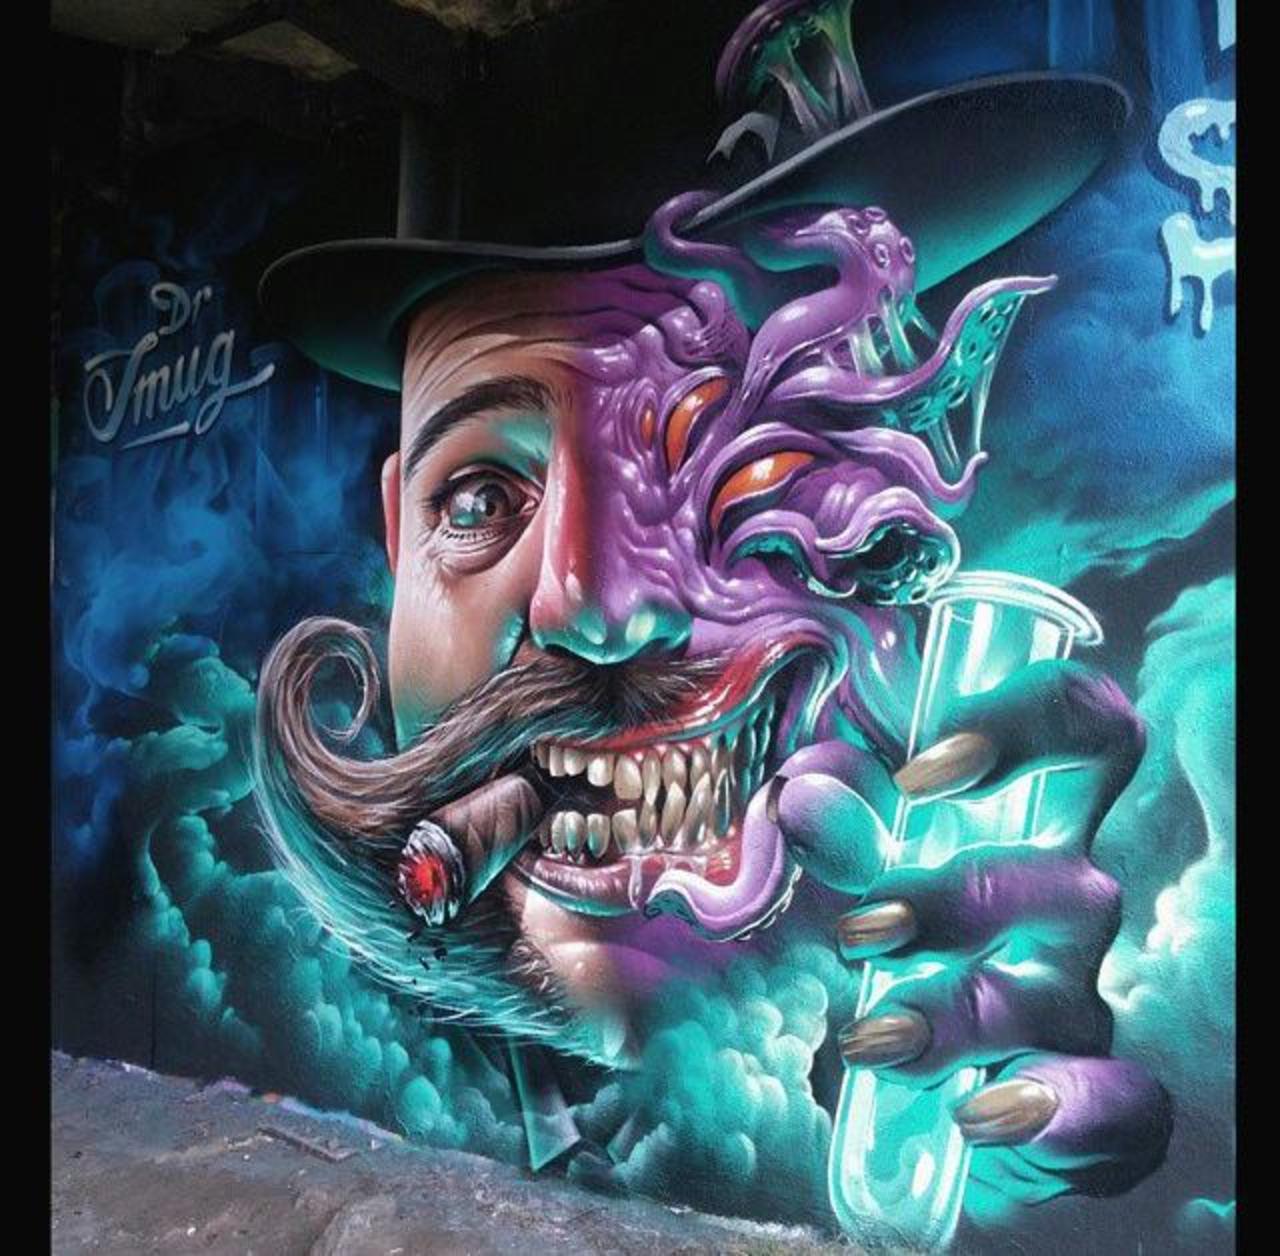 New Street Art piece by Smug & Saturno in Glasgow 

#art #arte #graffiti #streetart http://t.co/UGG2ABhreA